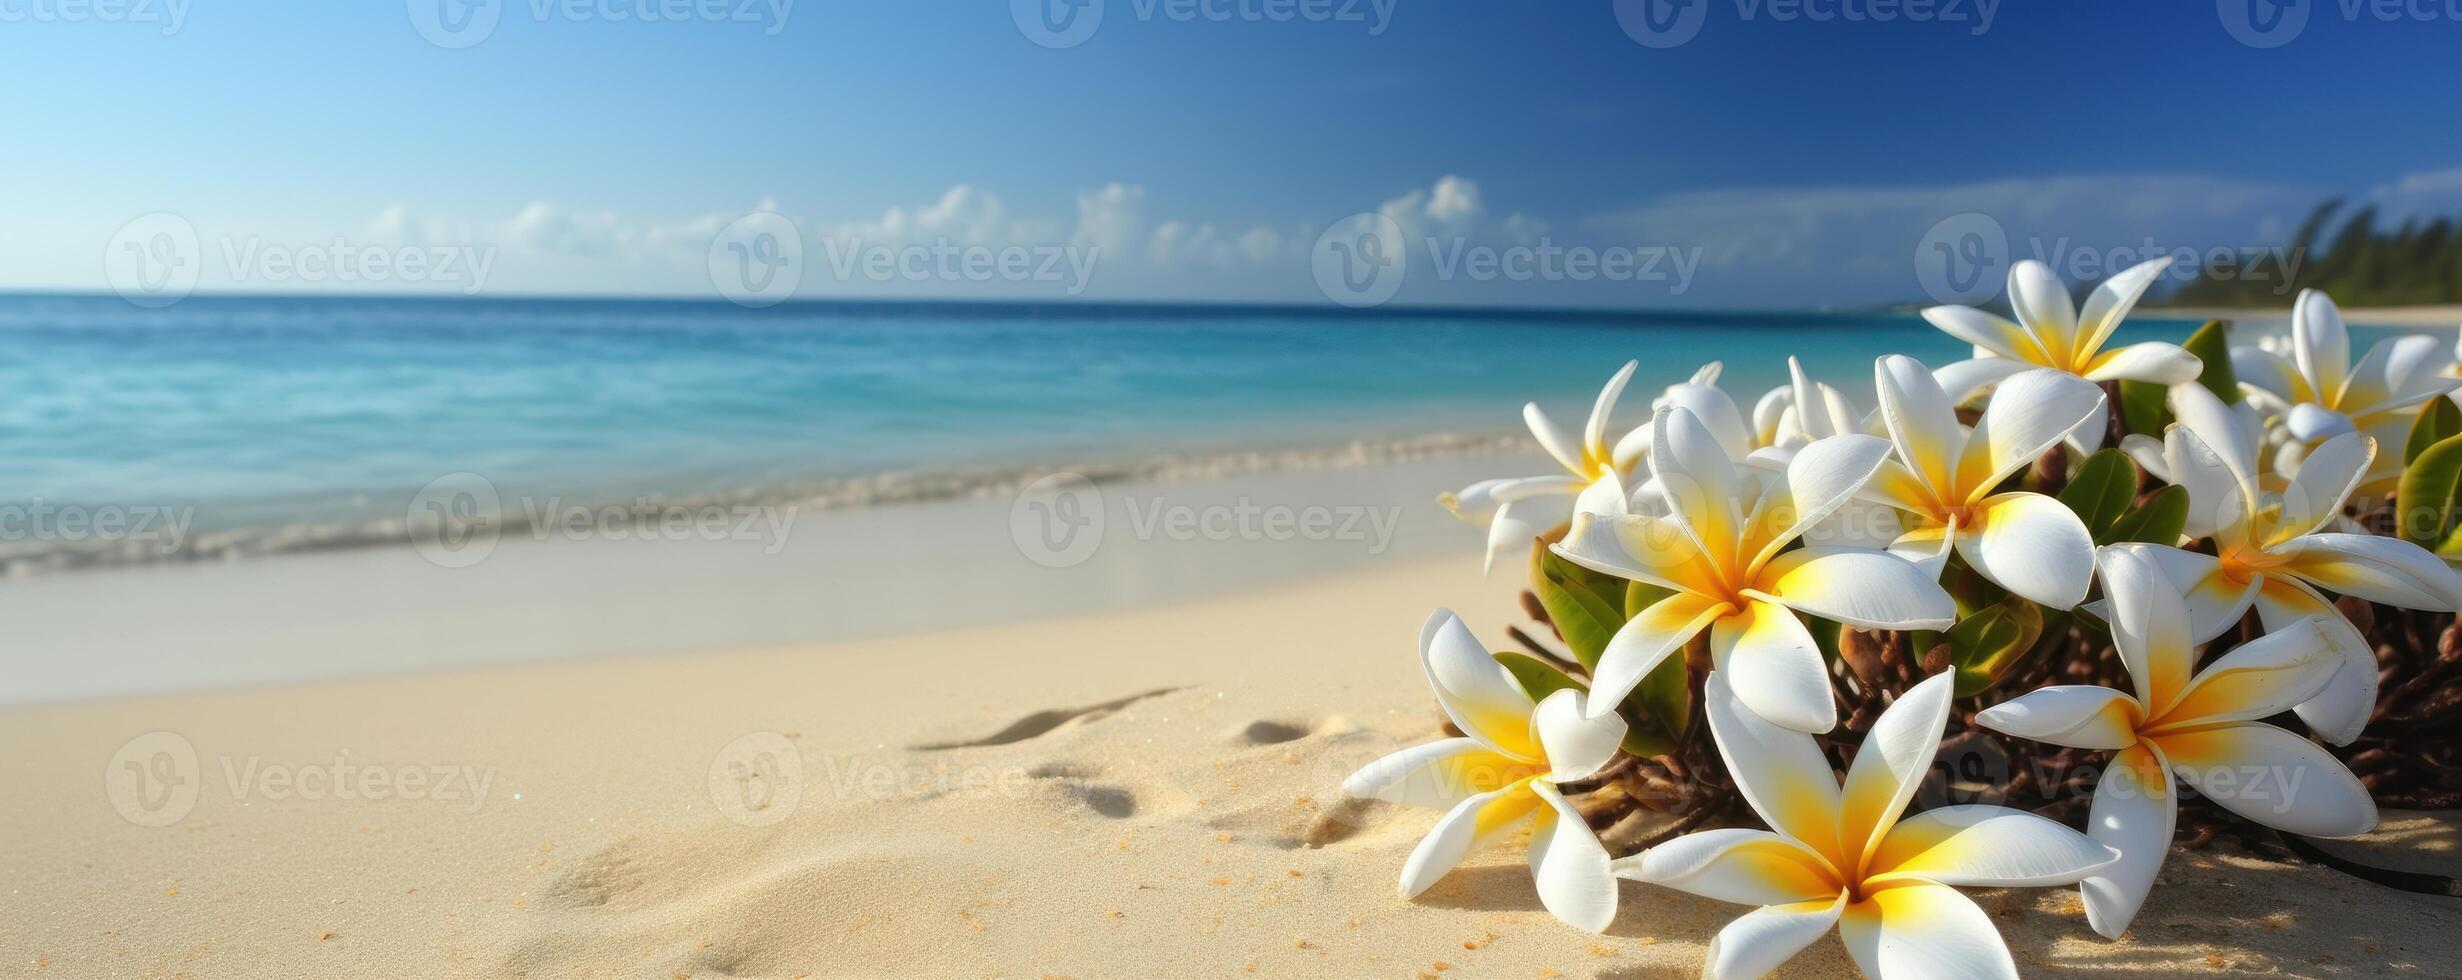 Plumeria Frangipani on tropical sea and beach blue sky background, Summer festive time. photo